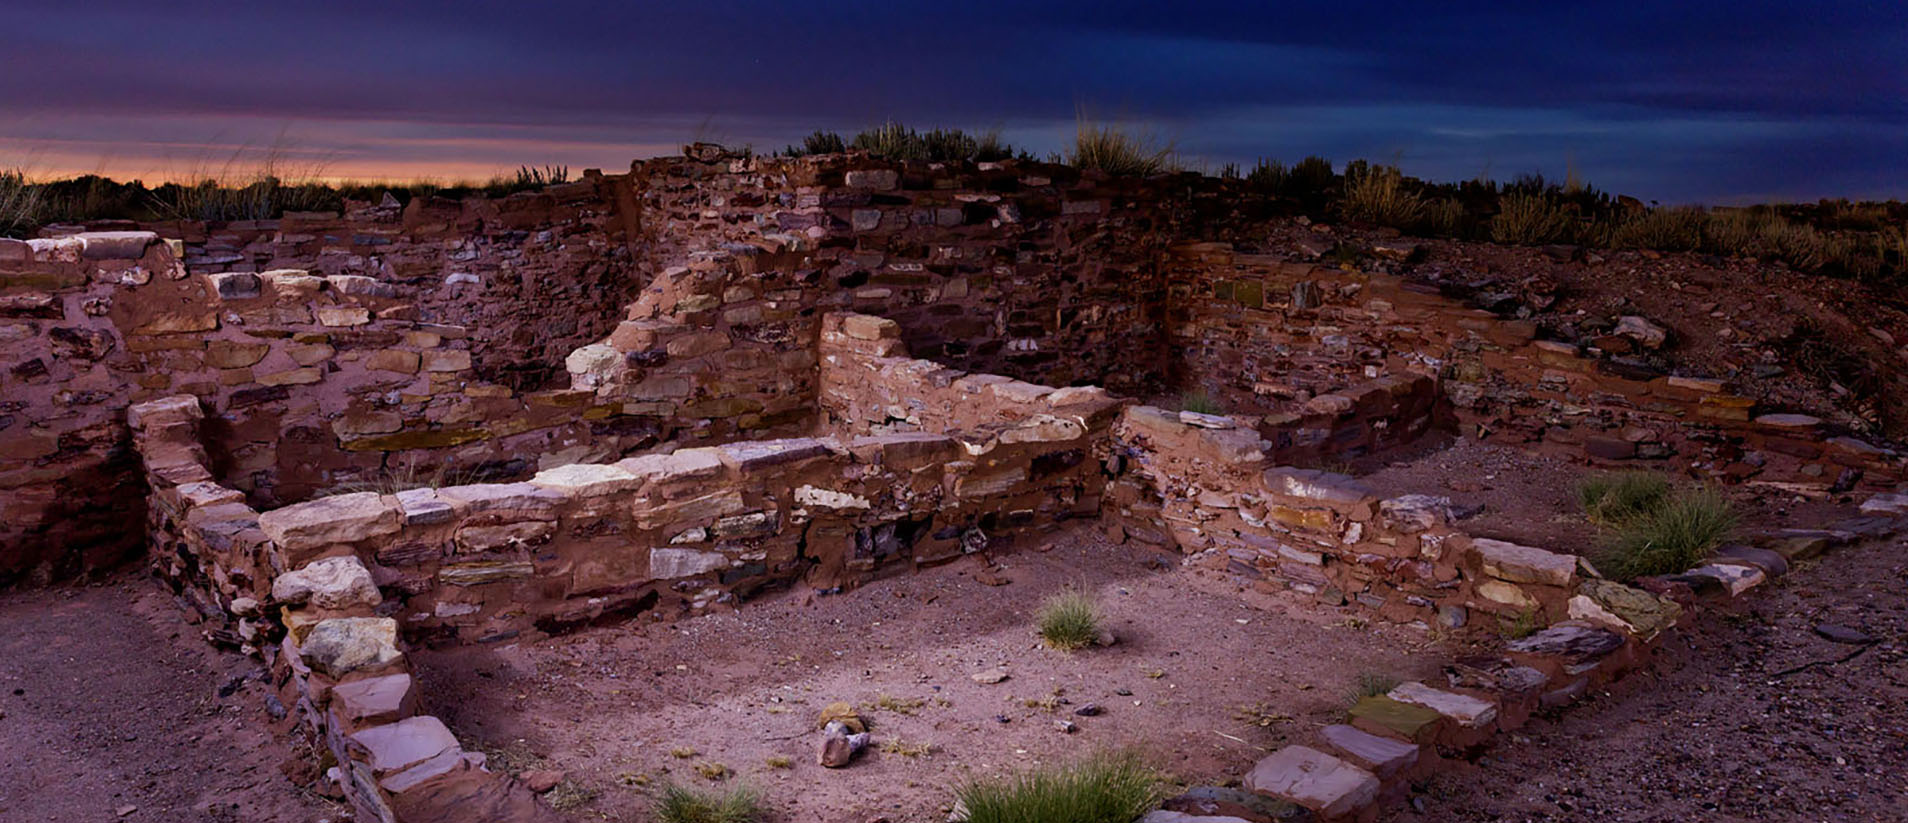 Some of the Hopi ruins at Homolovi State Park